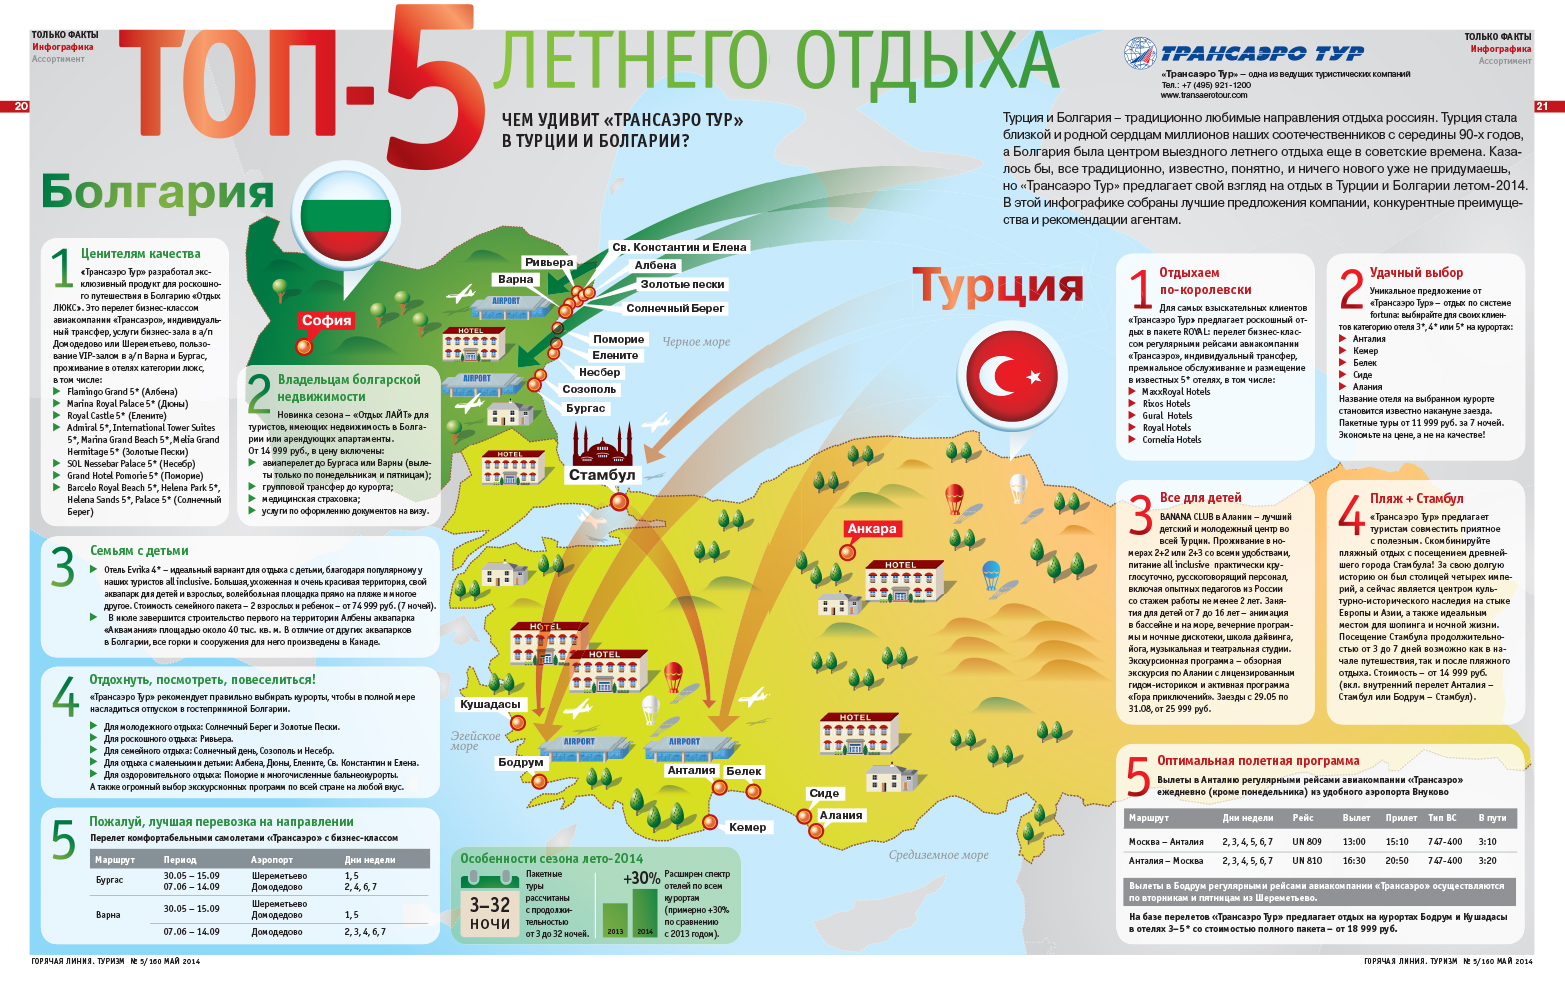 Болгария в августе 2021: въезд, ограничения, справки